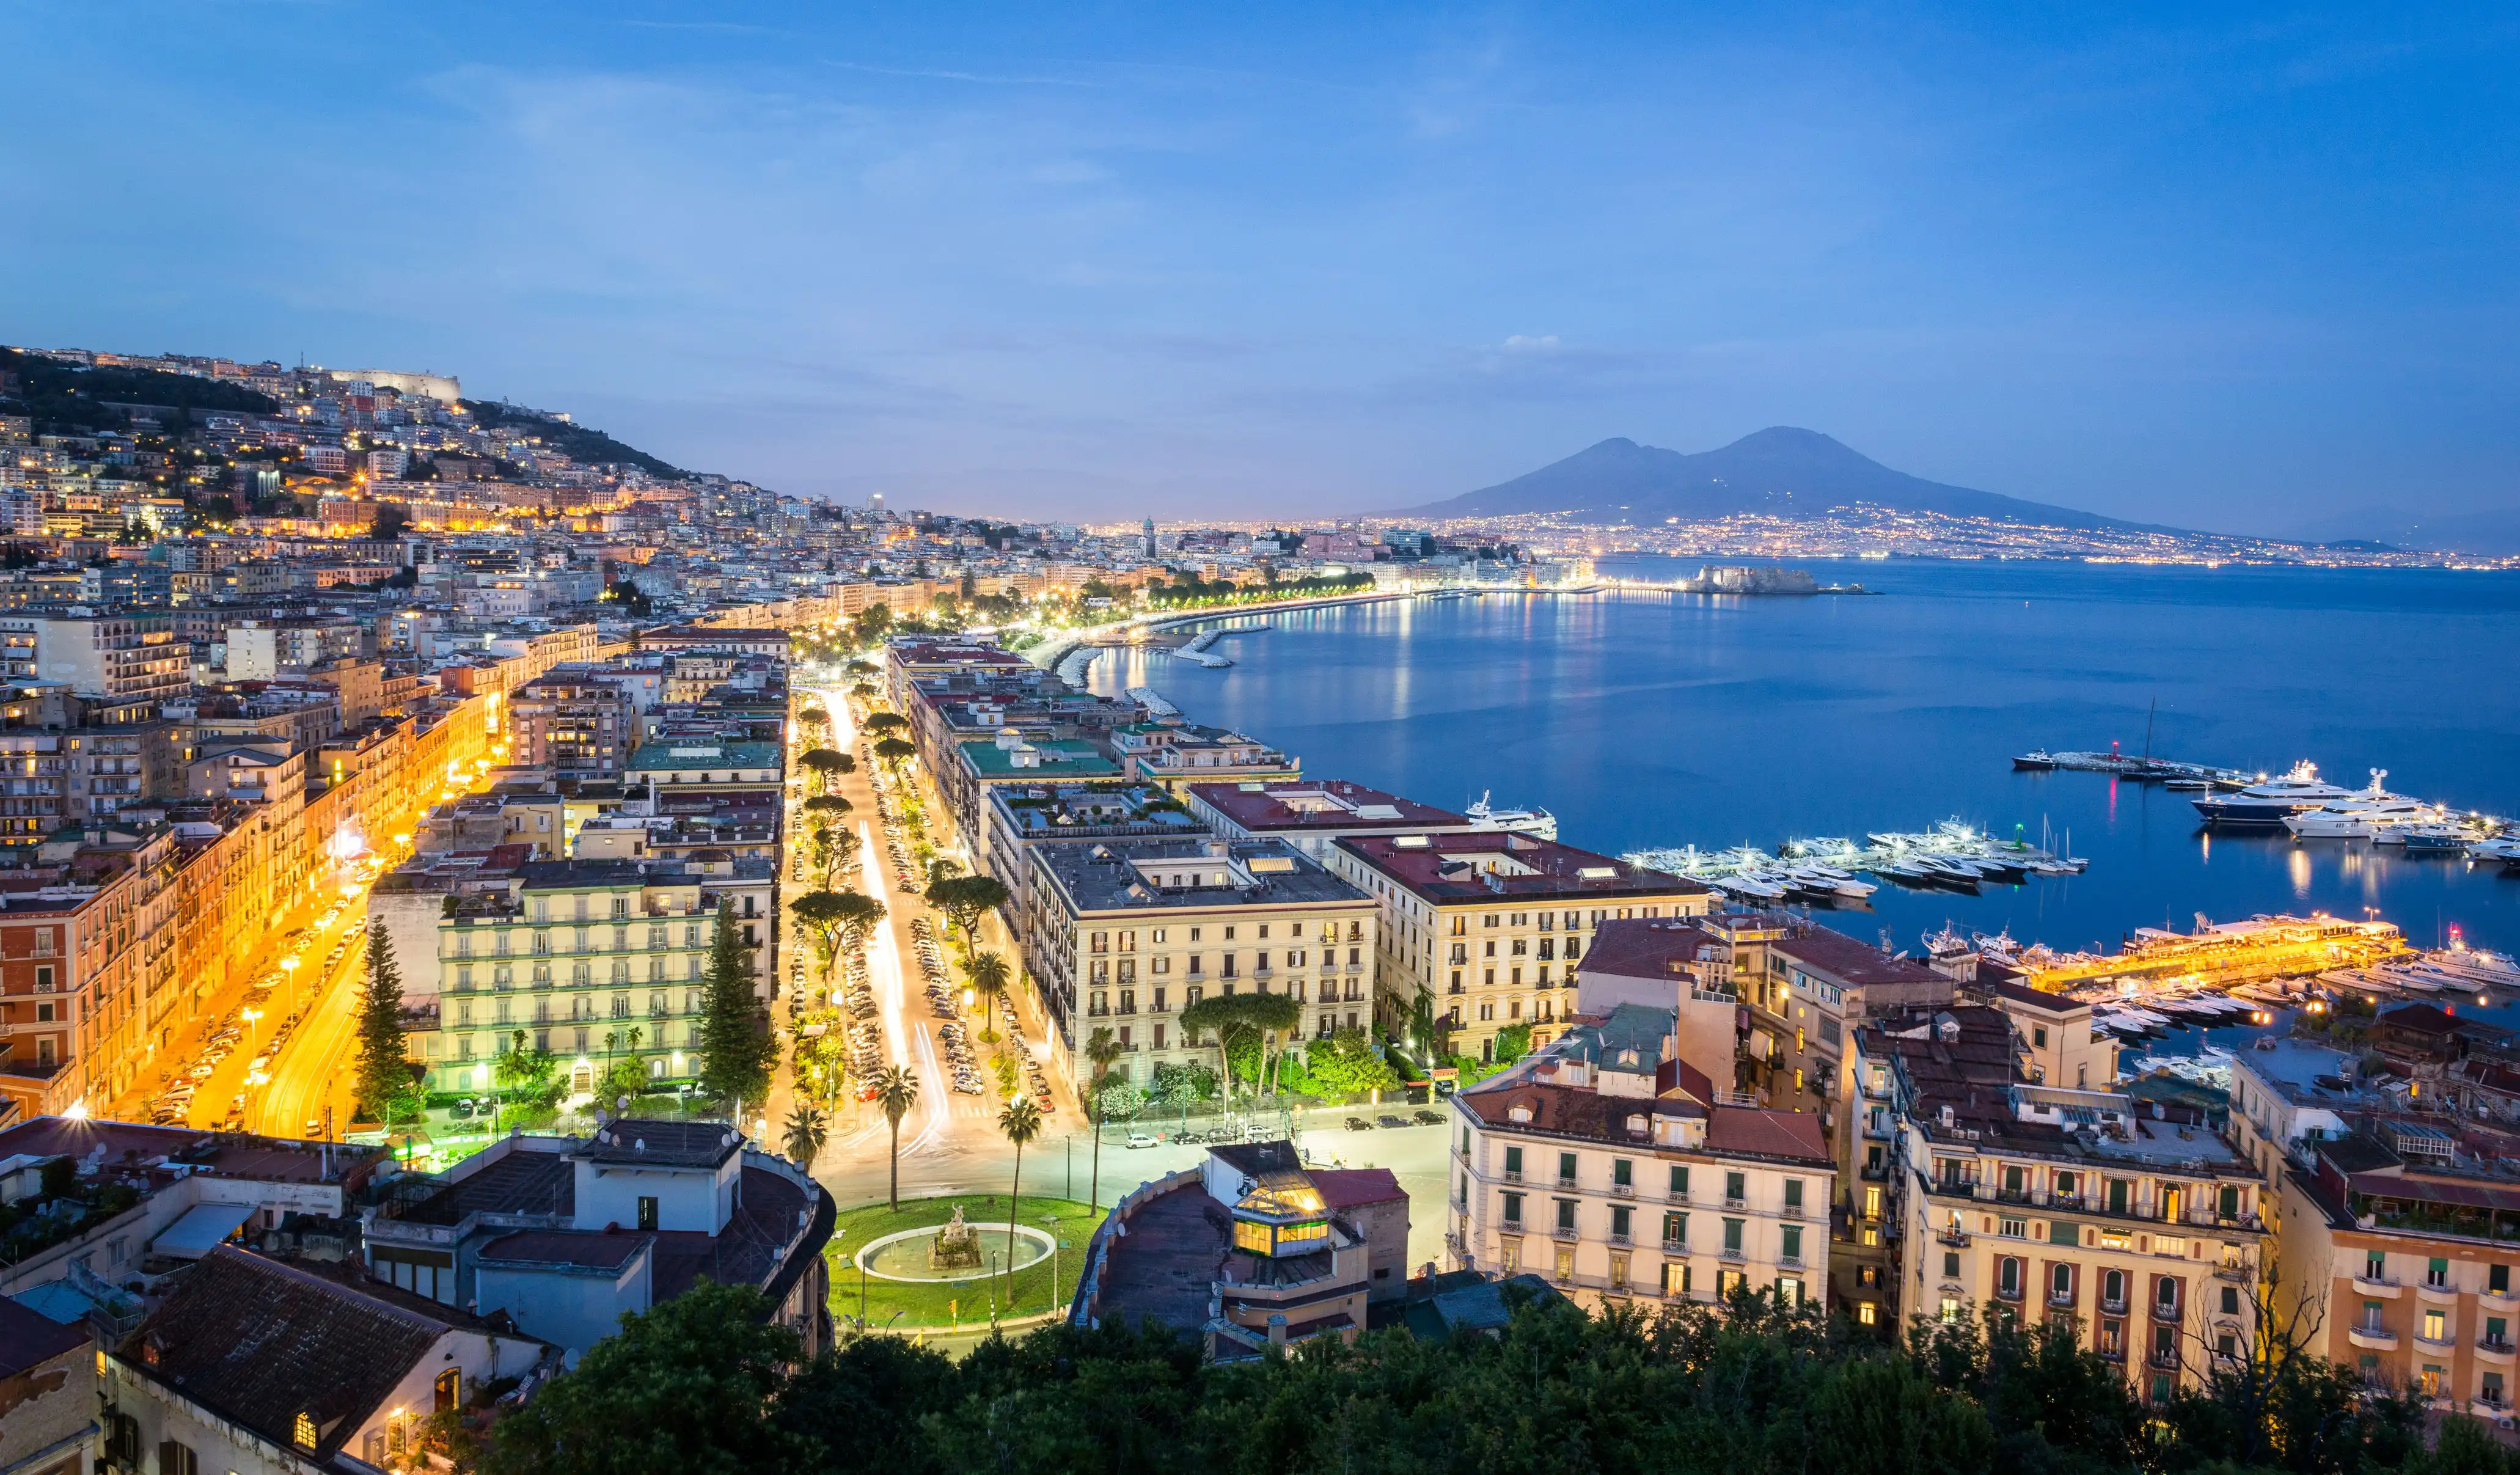 Naples tourism